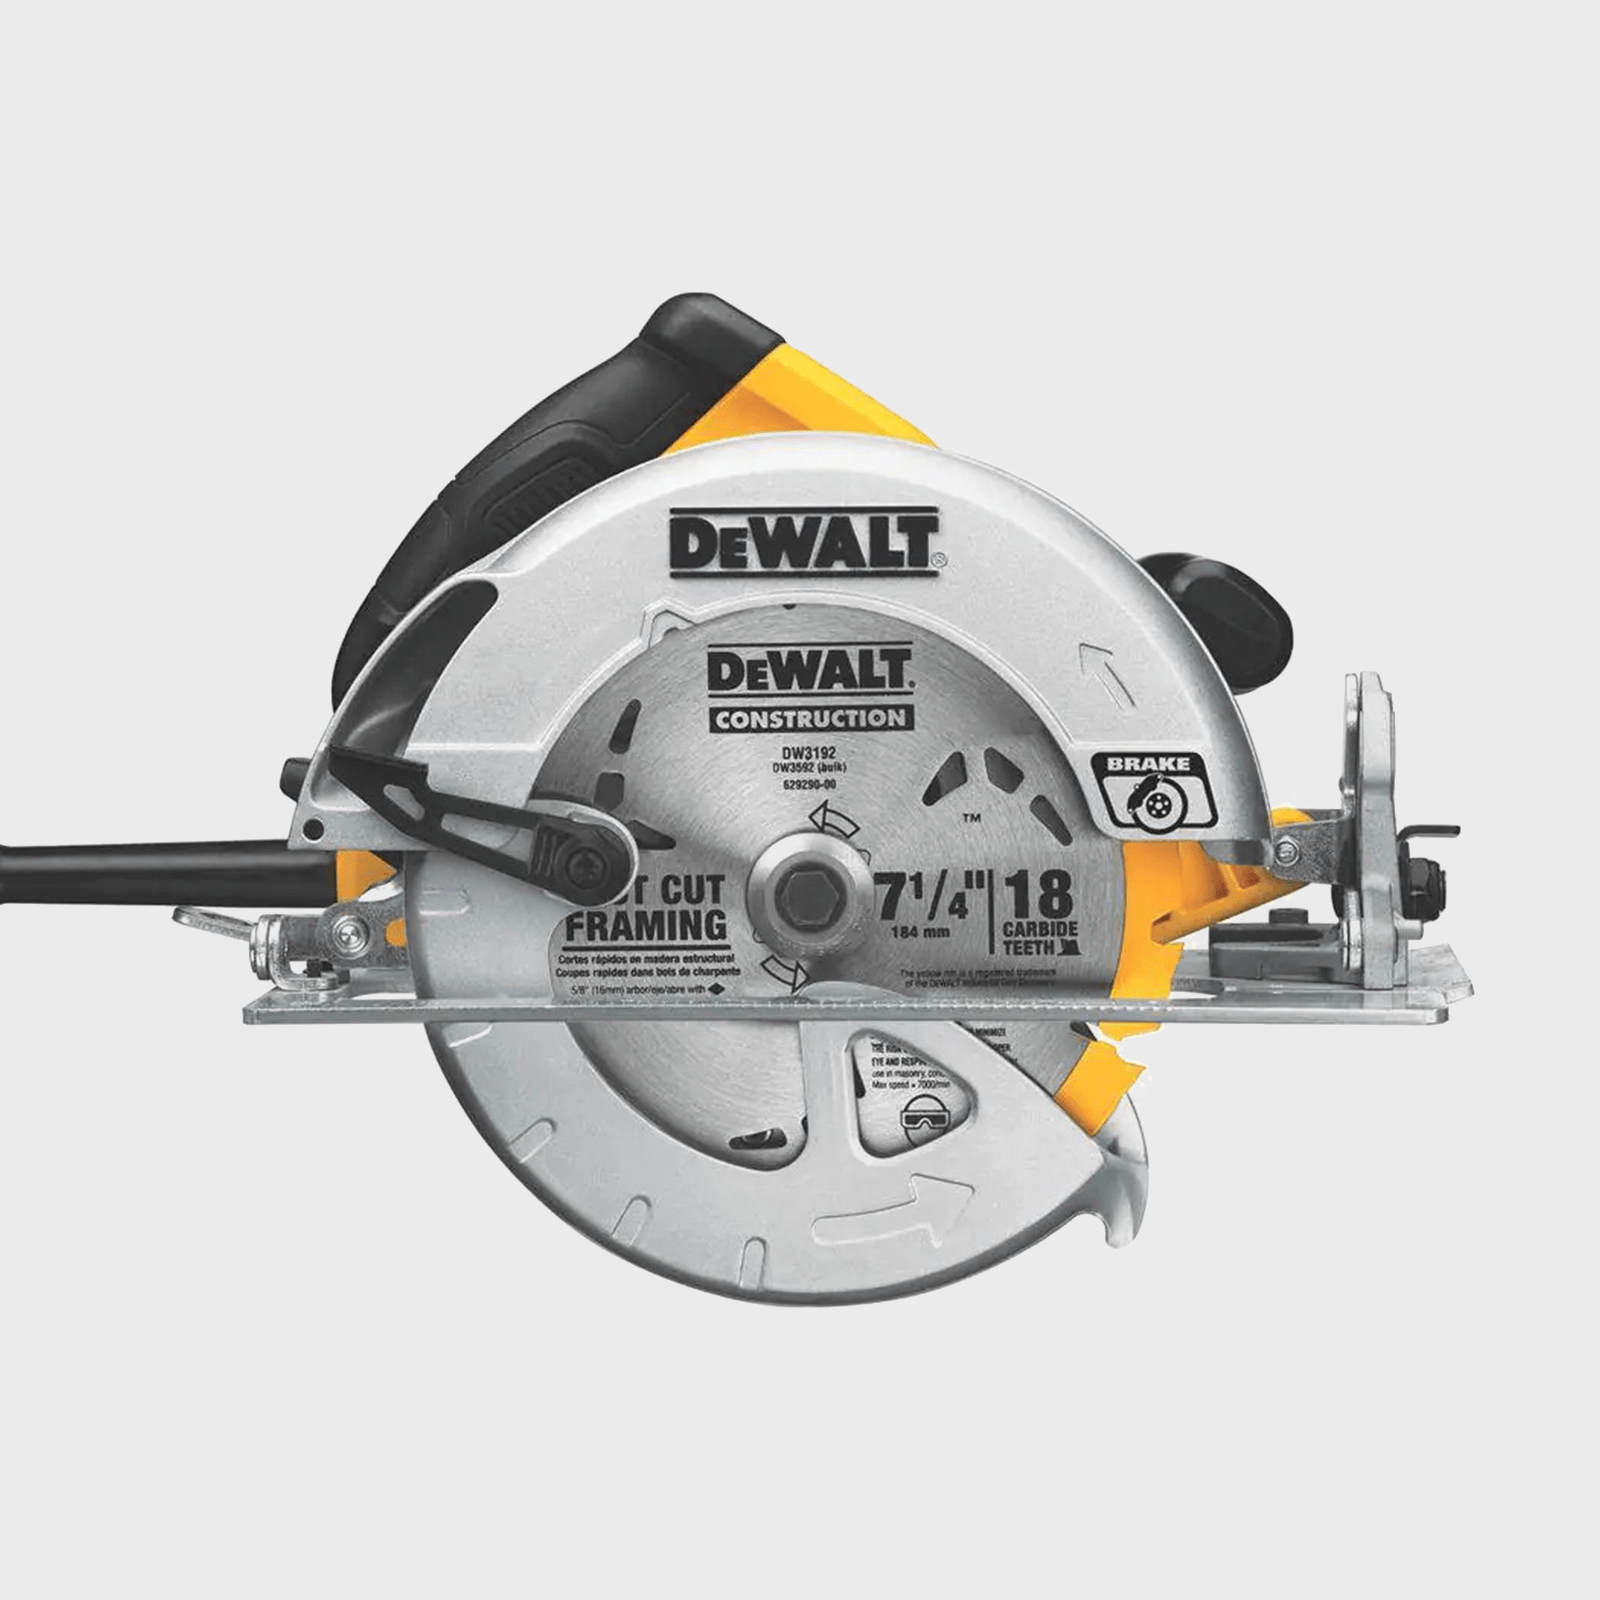 Dewalt Lightweight Circular Saw Electric Brake Ecomm Via Amazon